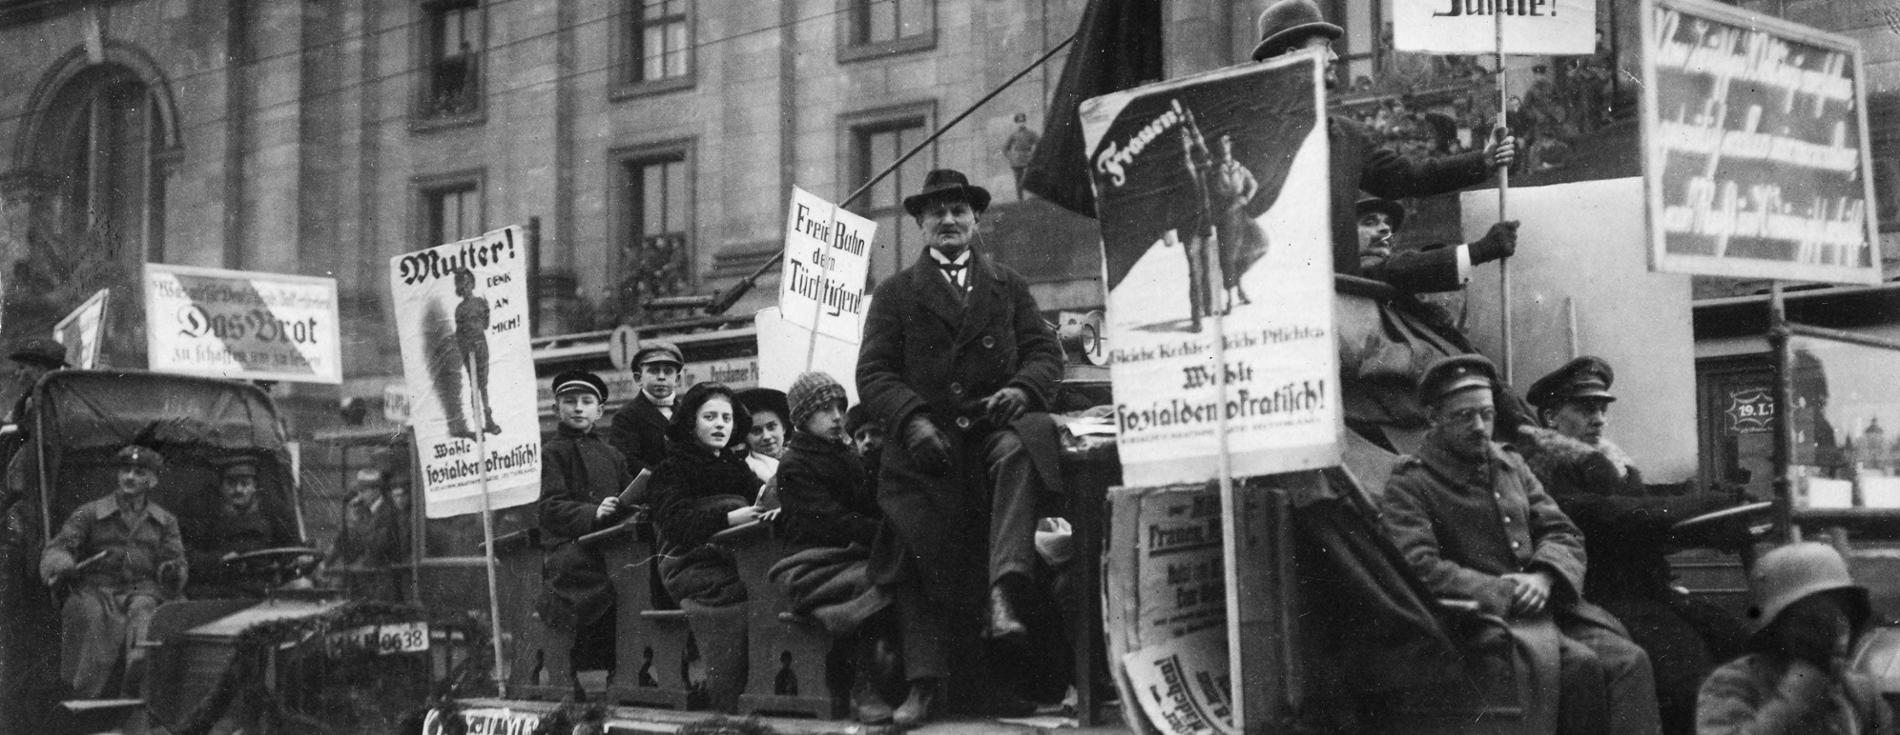 Wahlpropaganda-Korso der Sozialdemokraten in Berlin, 1919